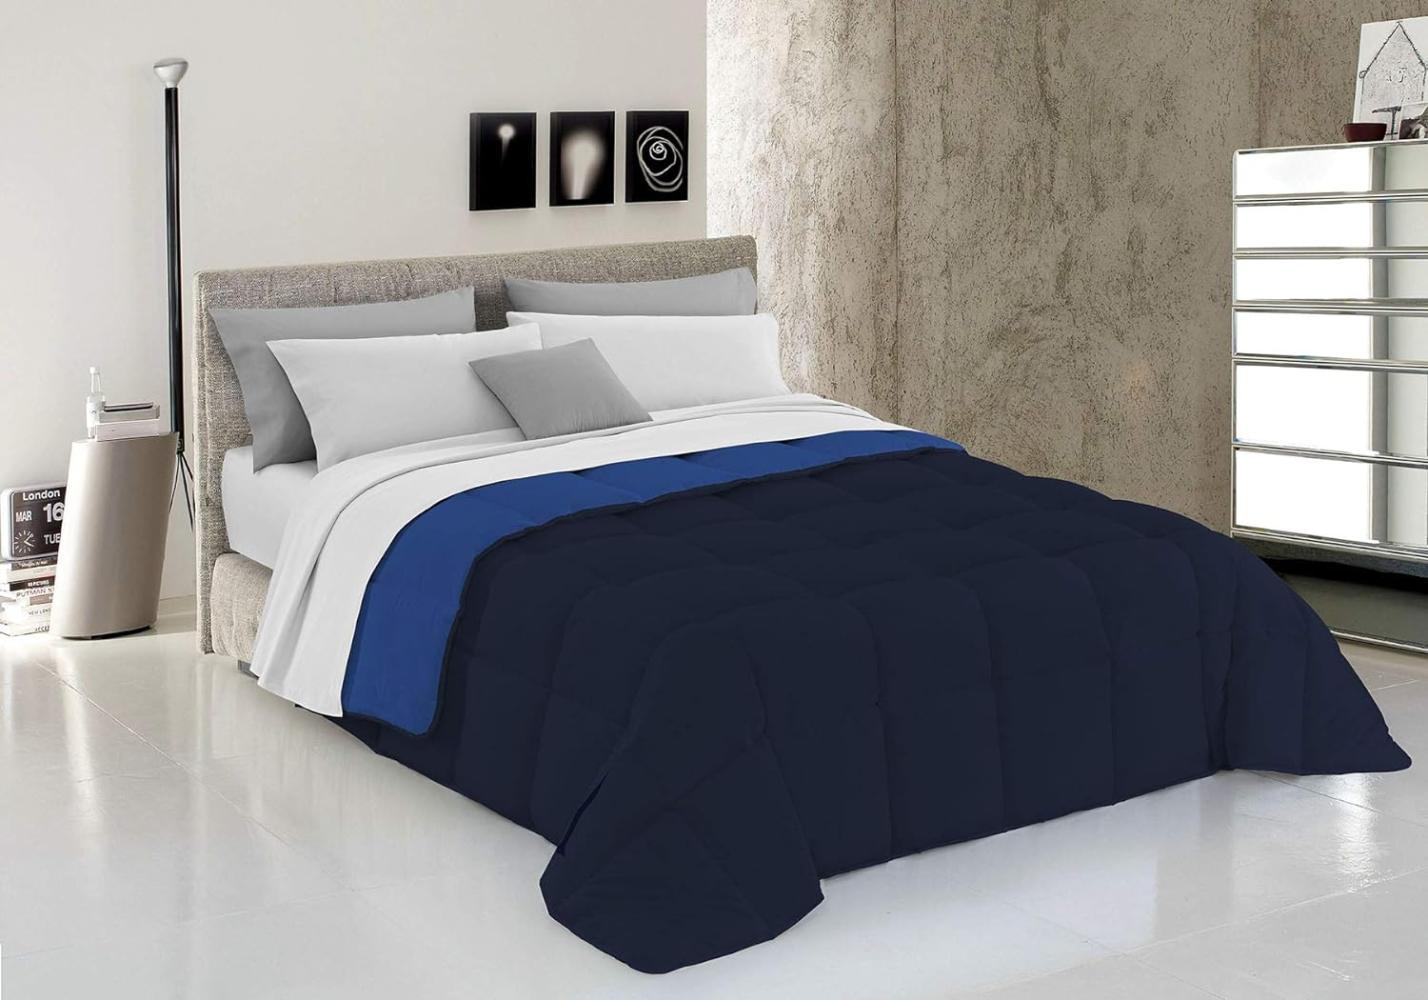 Italian Bed Linen Wintersteppdecke Elegant, Dunkelblau/Royal, Einzelne, 100% Mikrofaser, 170x260cm Bild 1